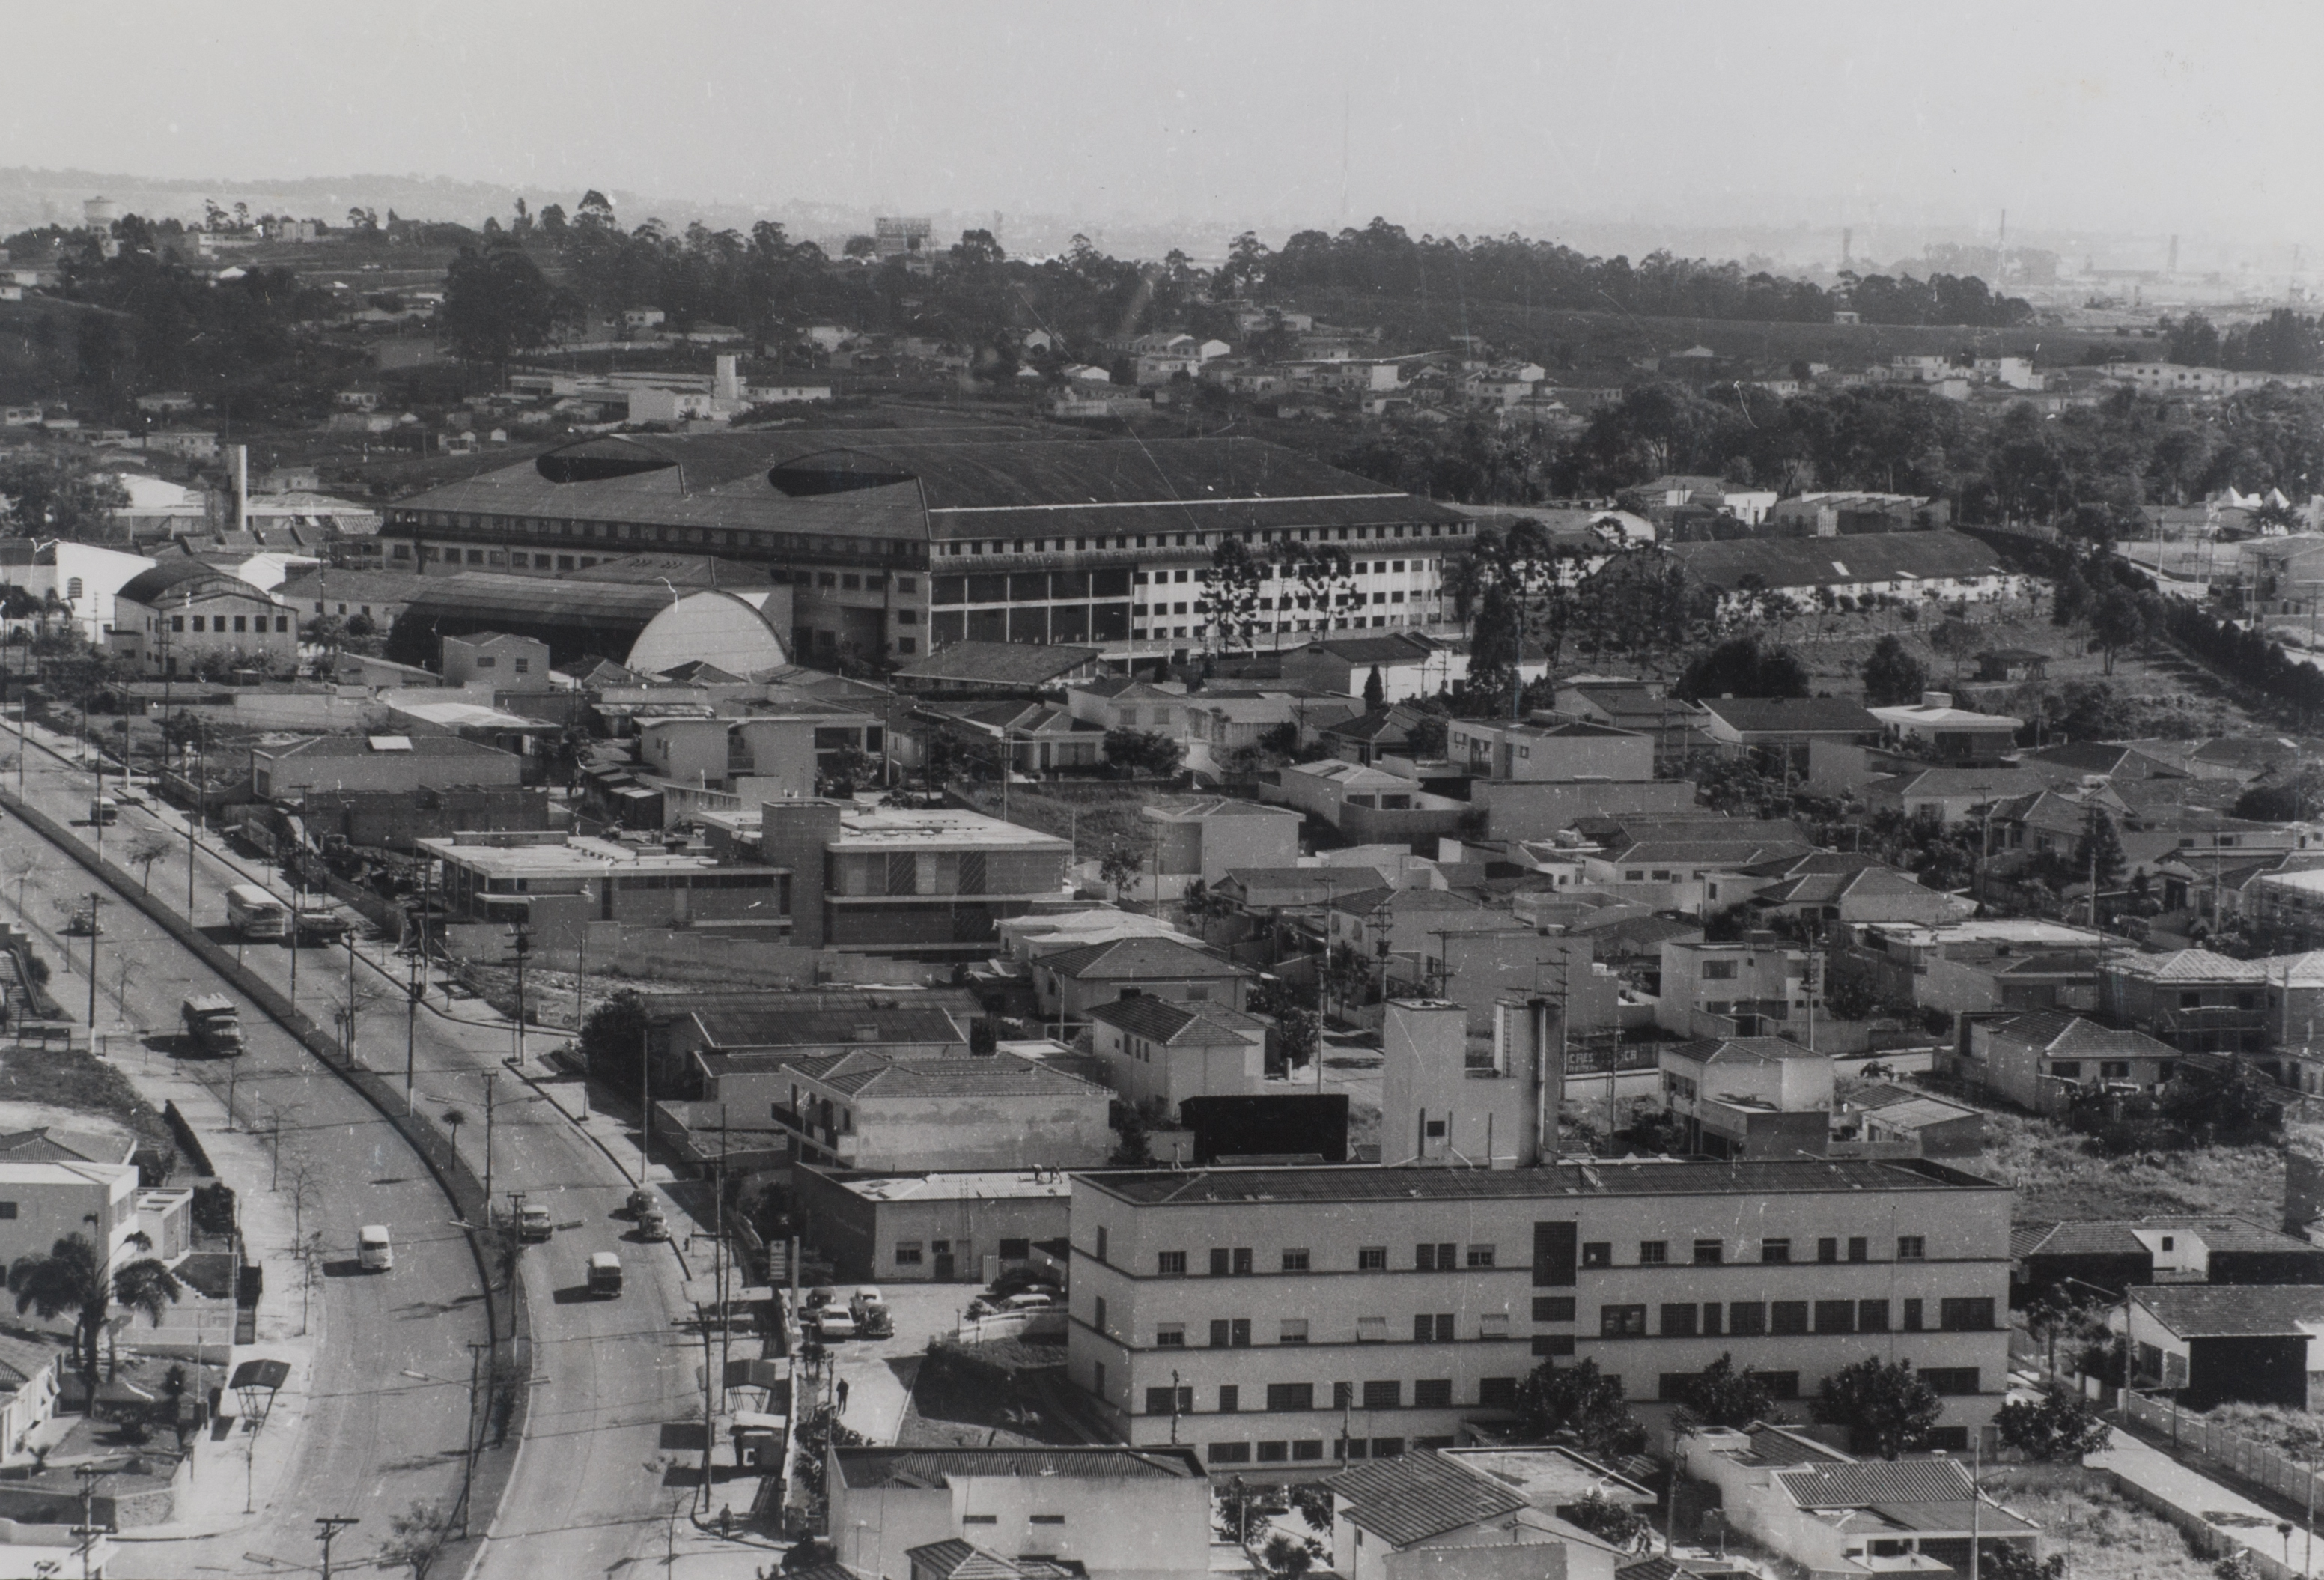 vista da cidade década de 50